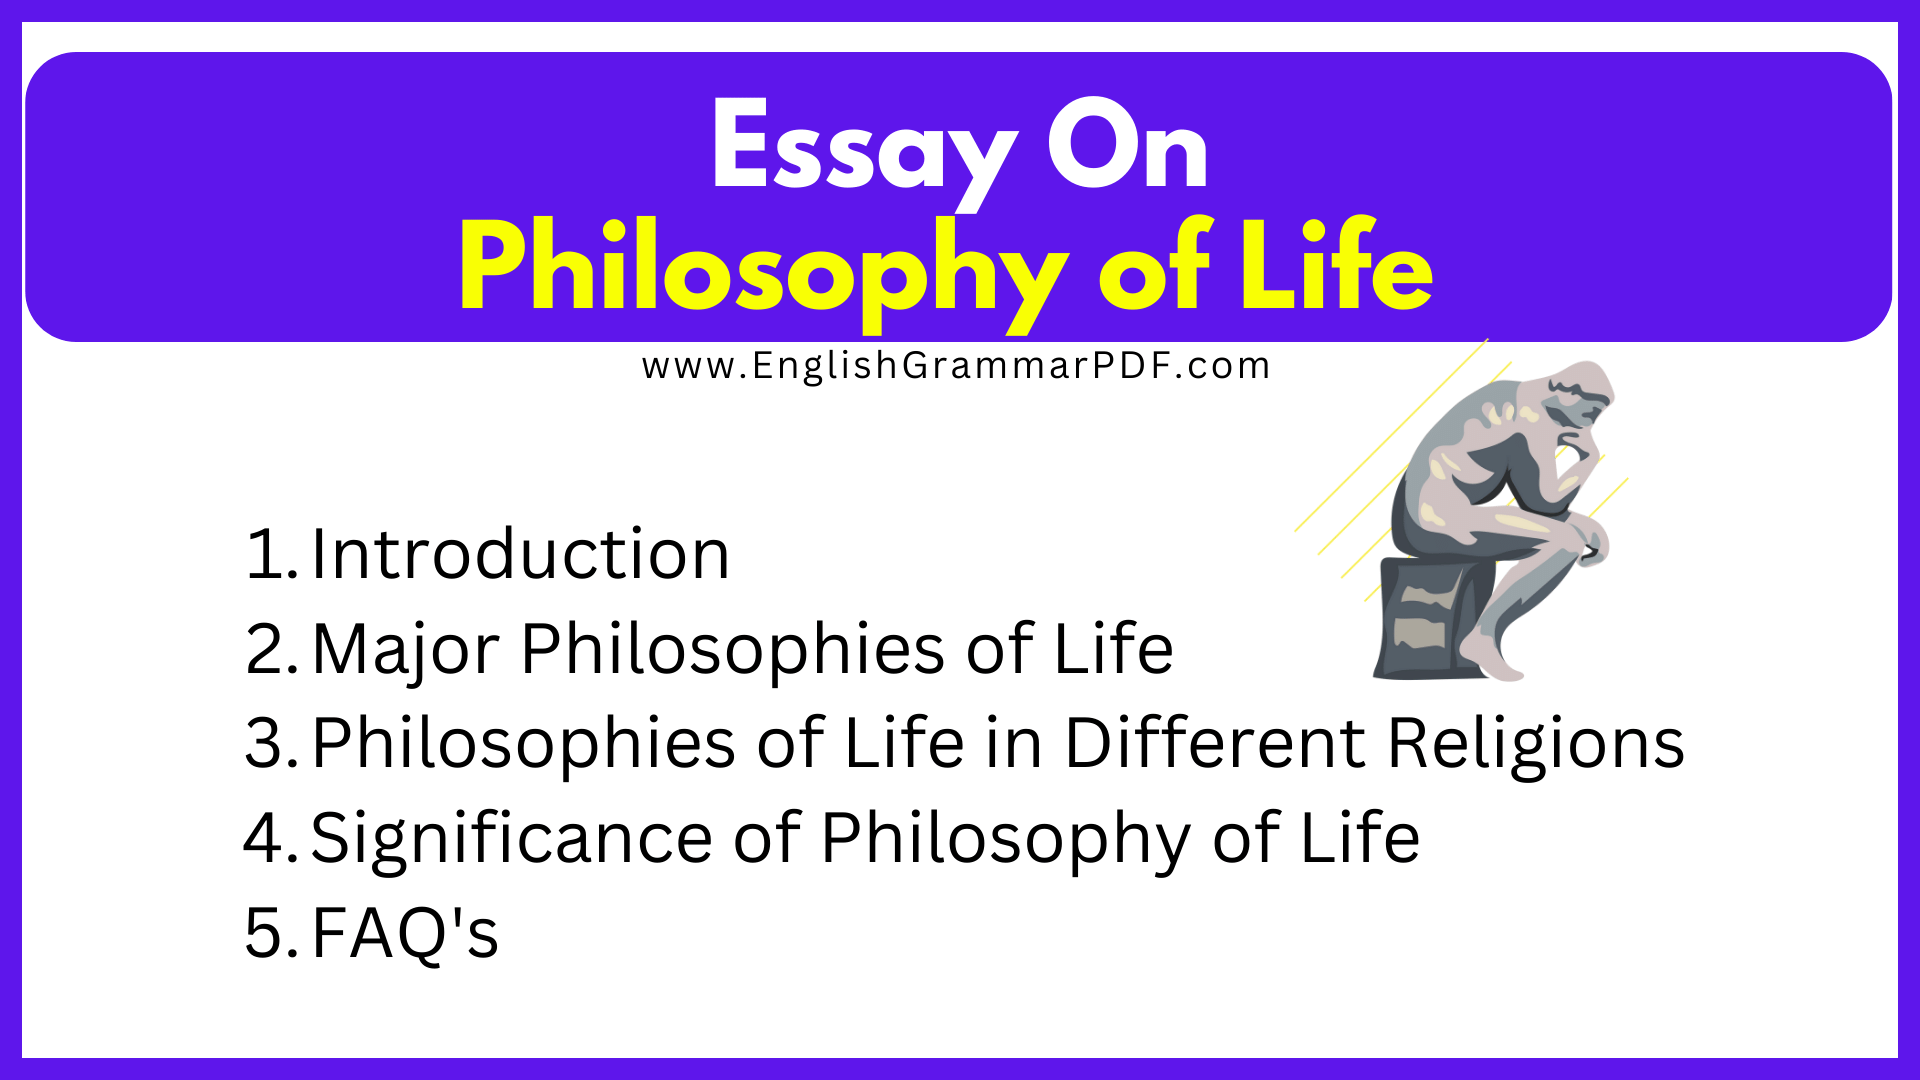 Essay On Philosophy of Life